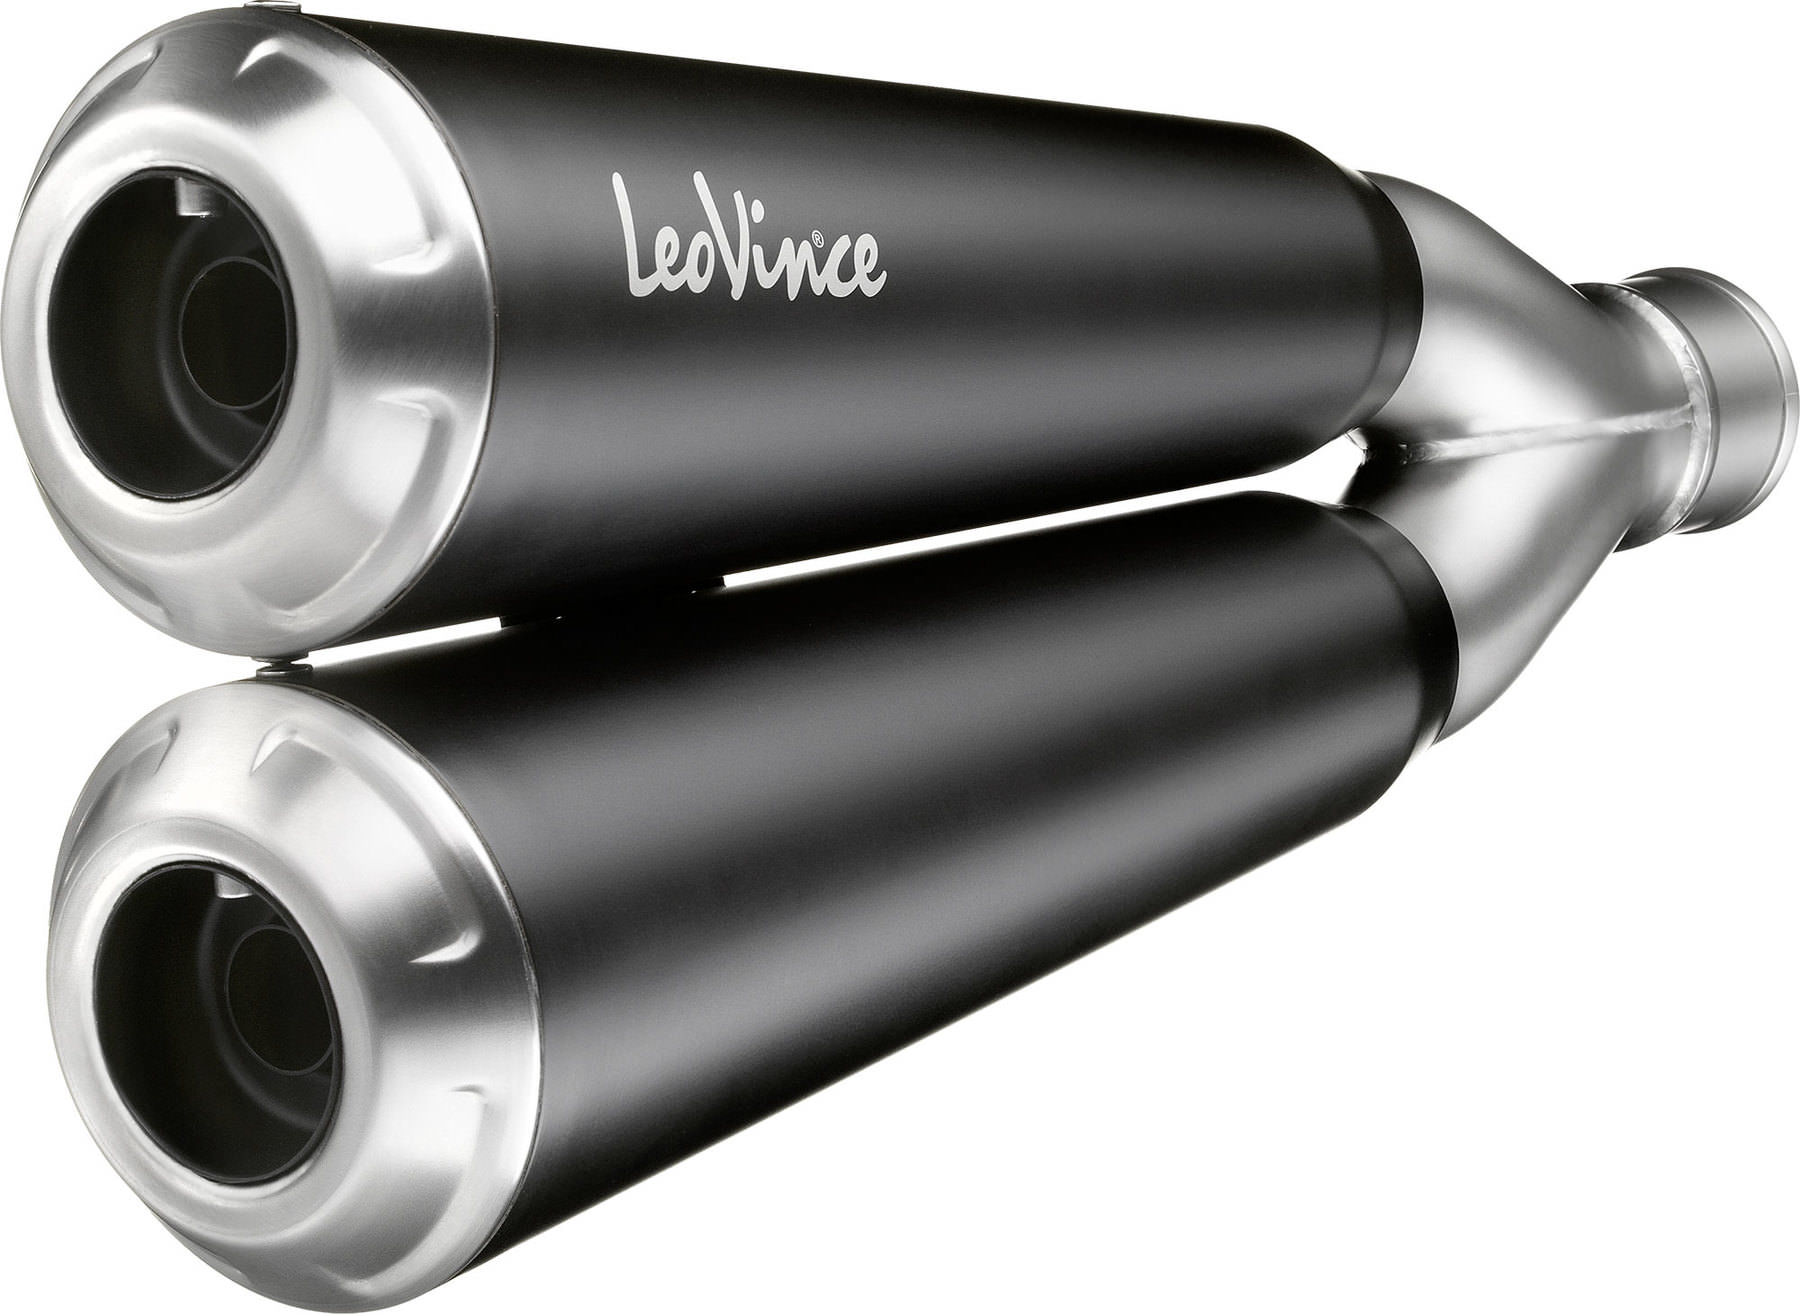 Leo Vince LeoVince LV-10 silencer with EG-BE Stainless steel or black finish